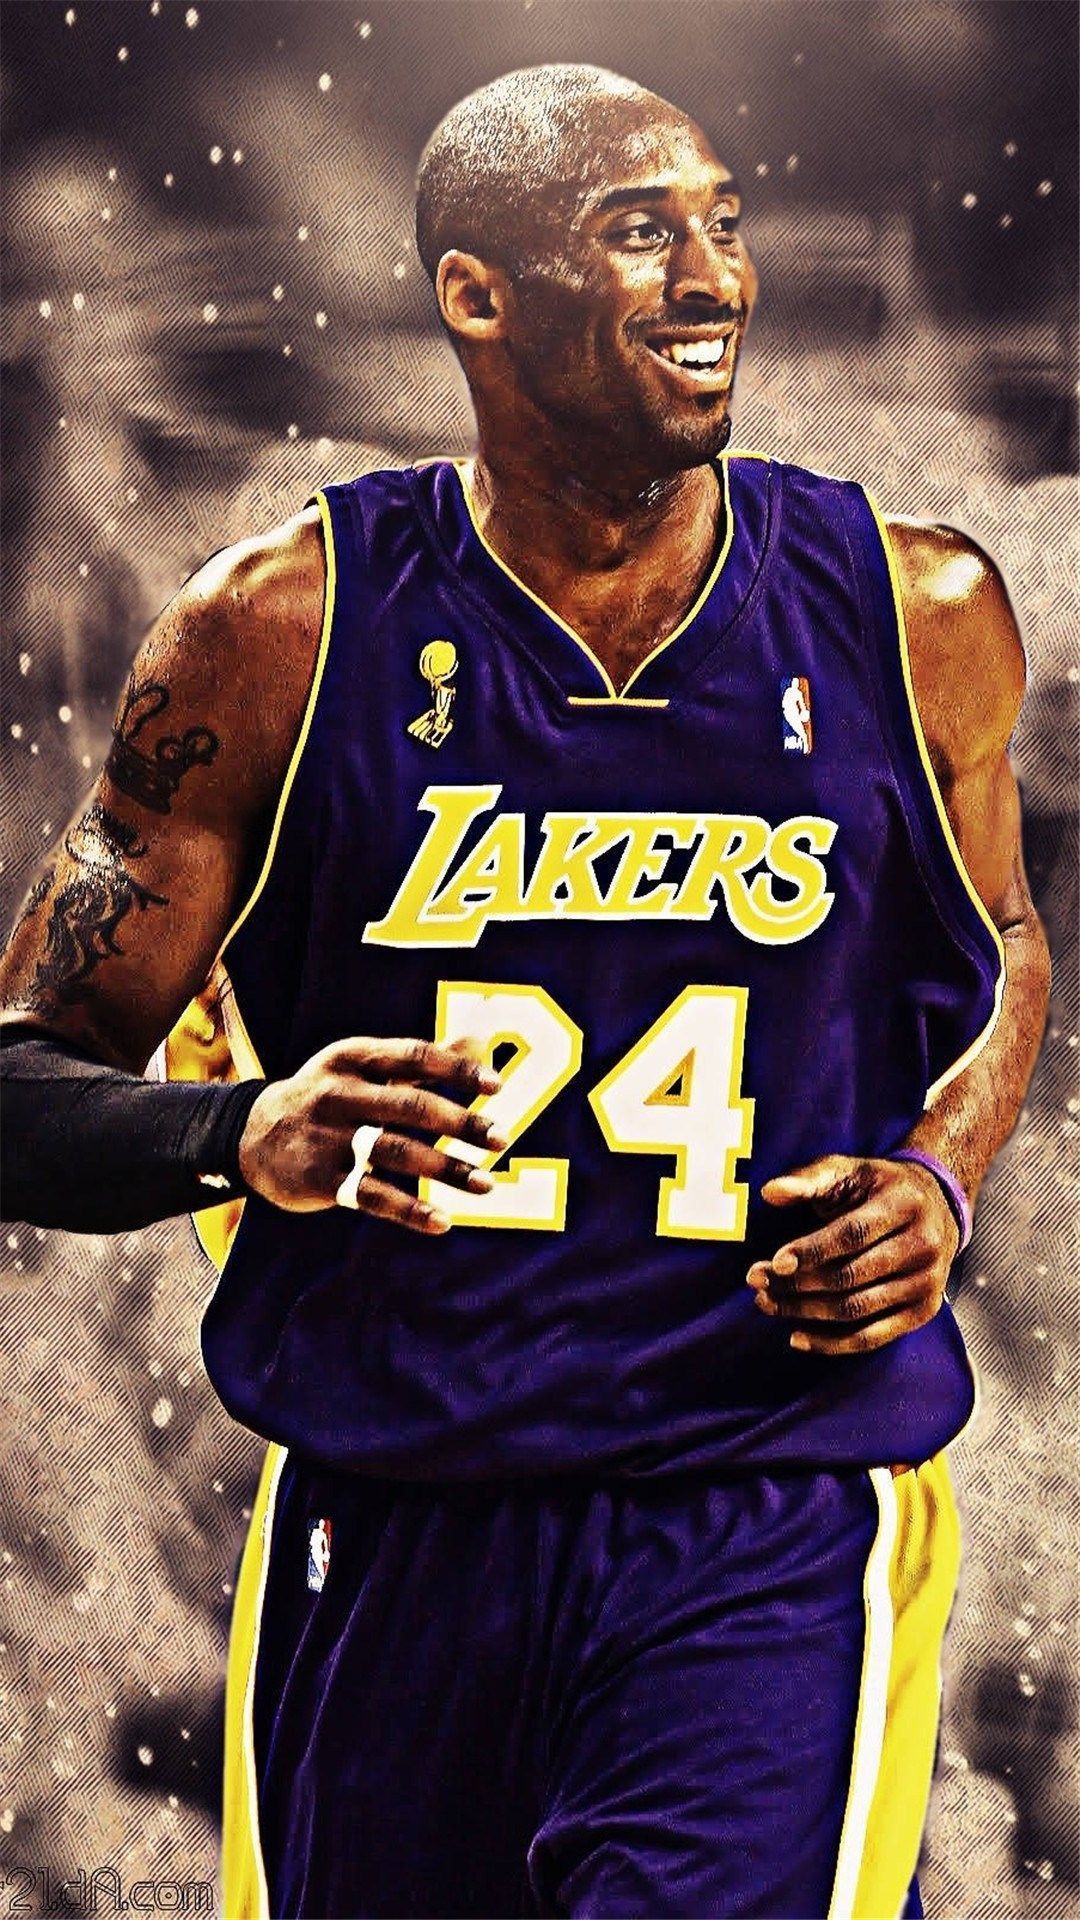 Lakers 24 Kobe Bryant. Kobe bryant picture, Kobe bryant black mamba, Kobe bryant wallpaper